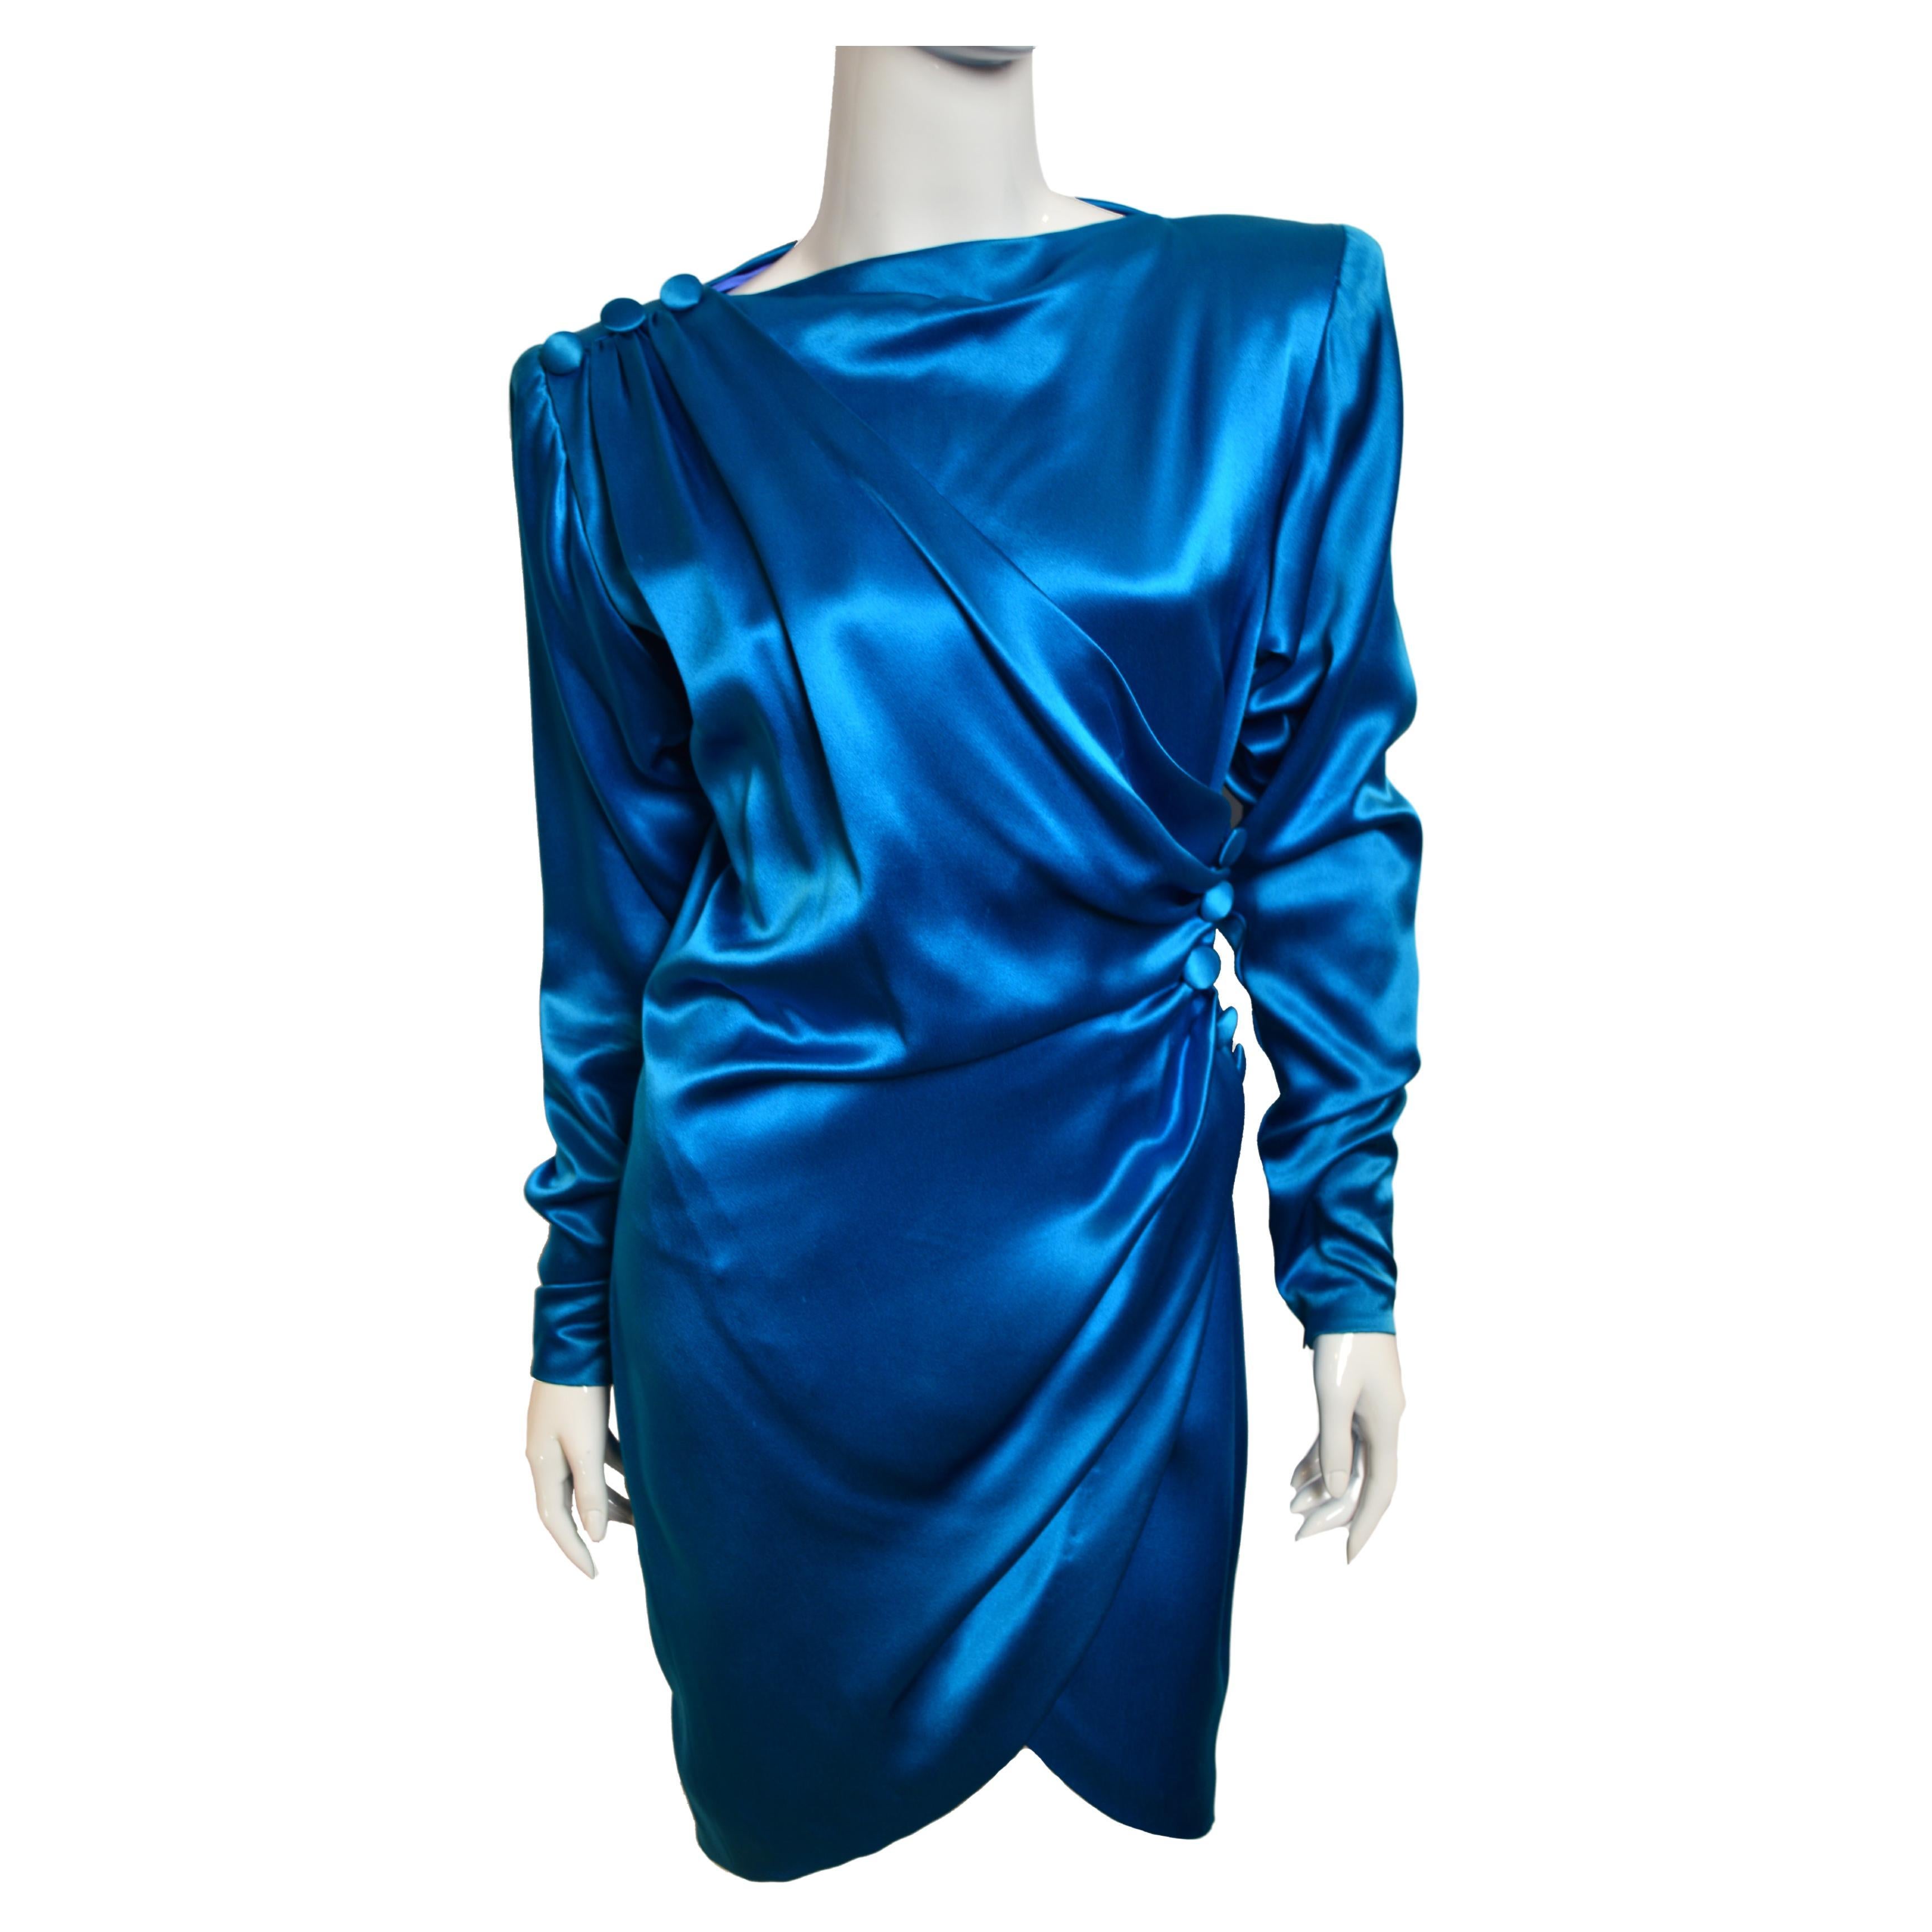 Vintage Yves Saint Laurent Haute Couture electric blue documented dress, 1987 For Sale